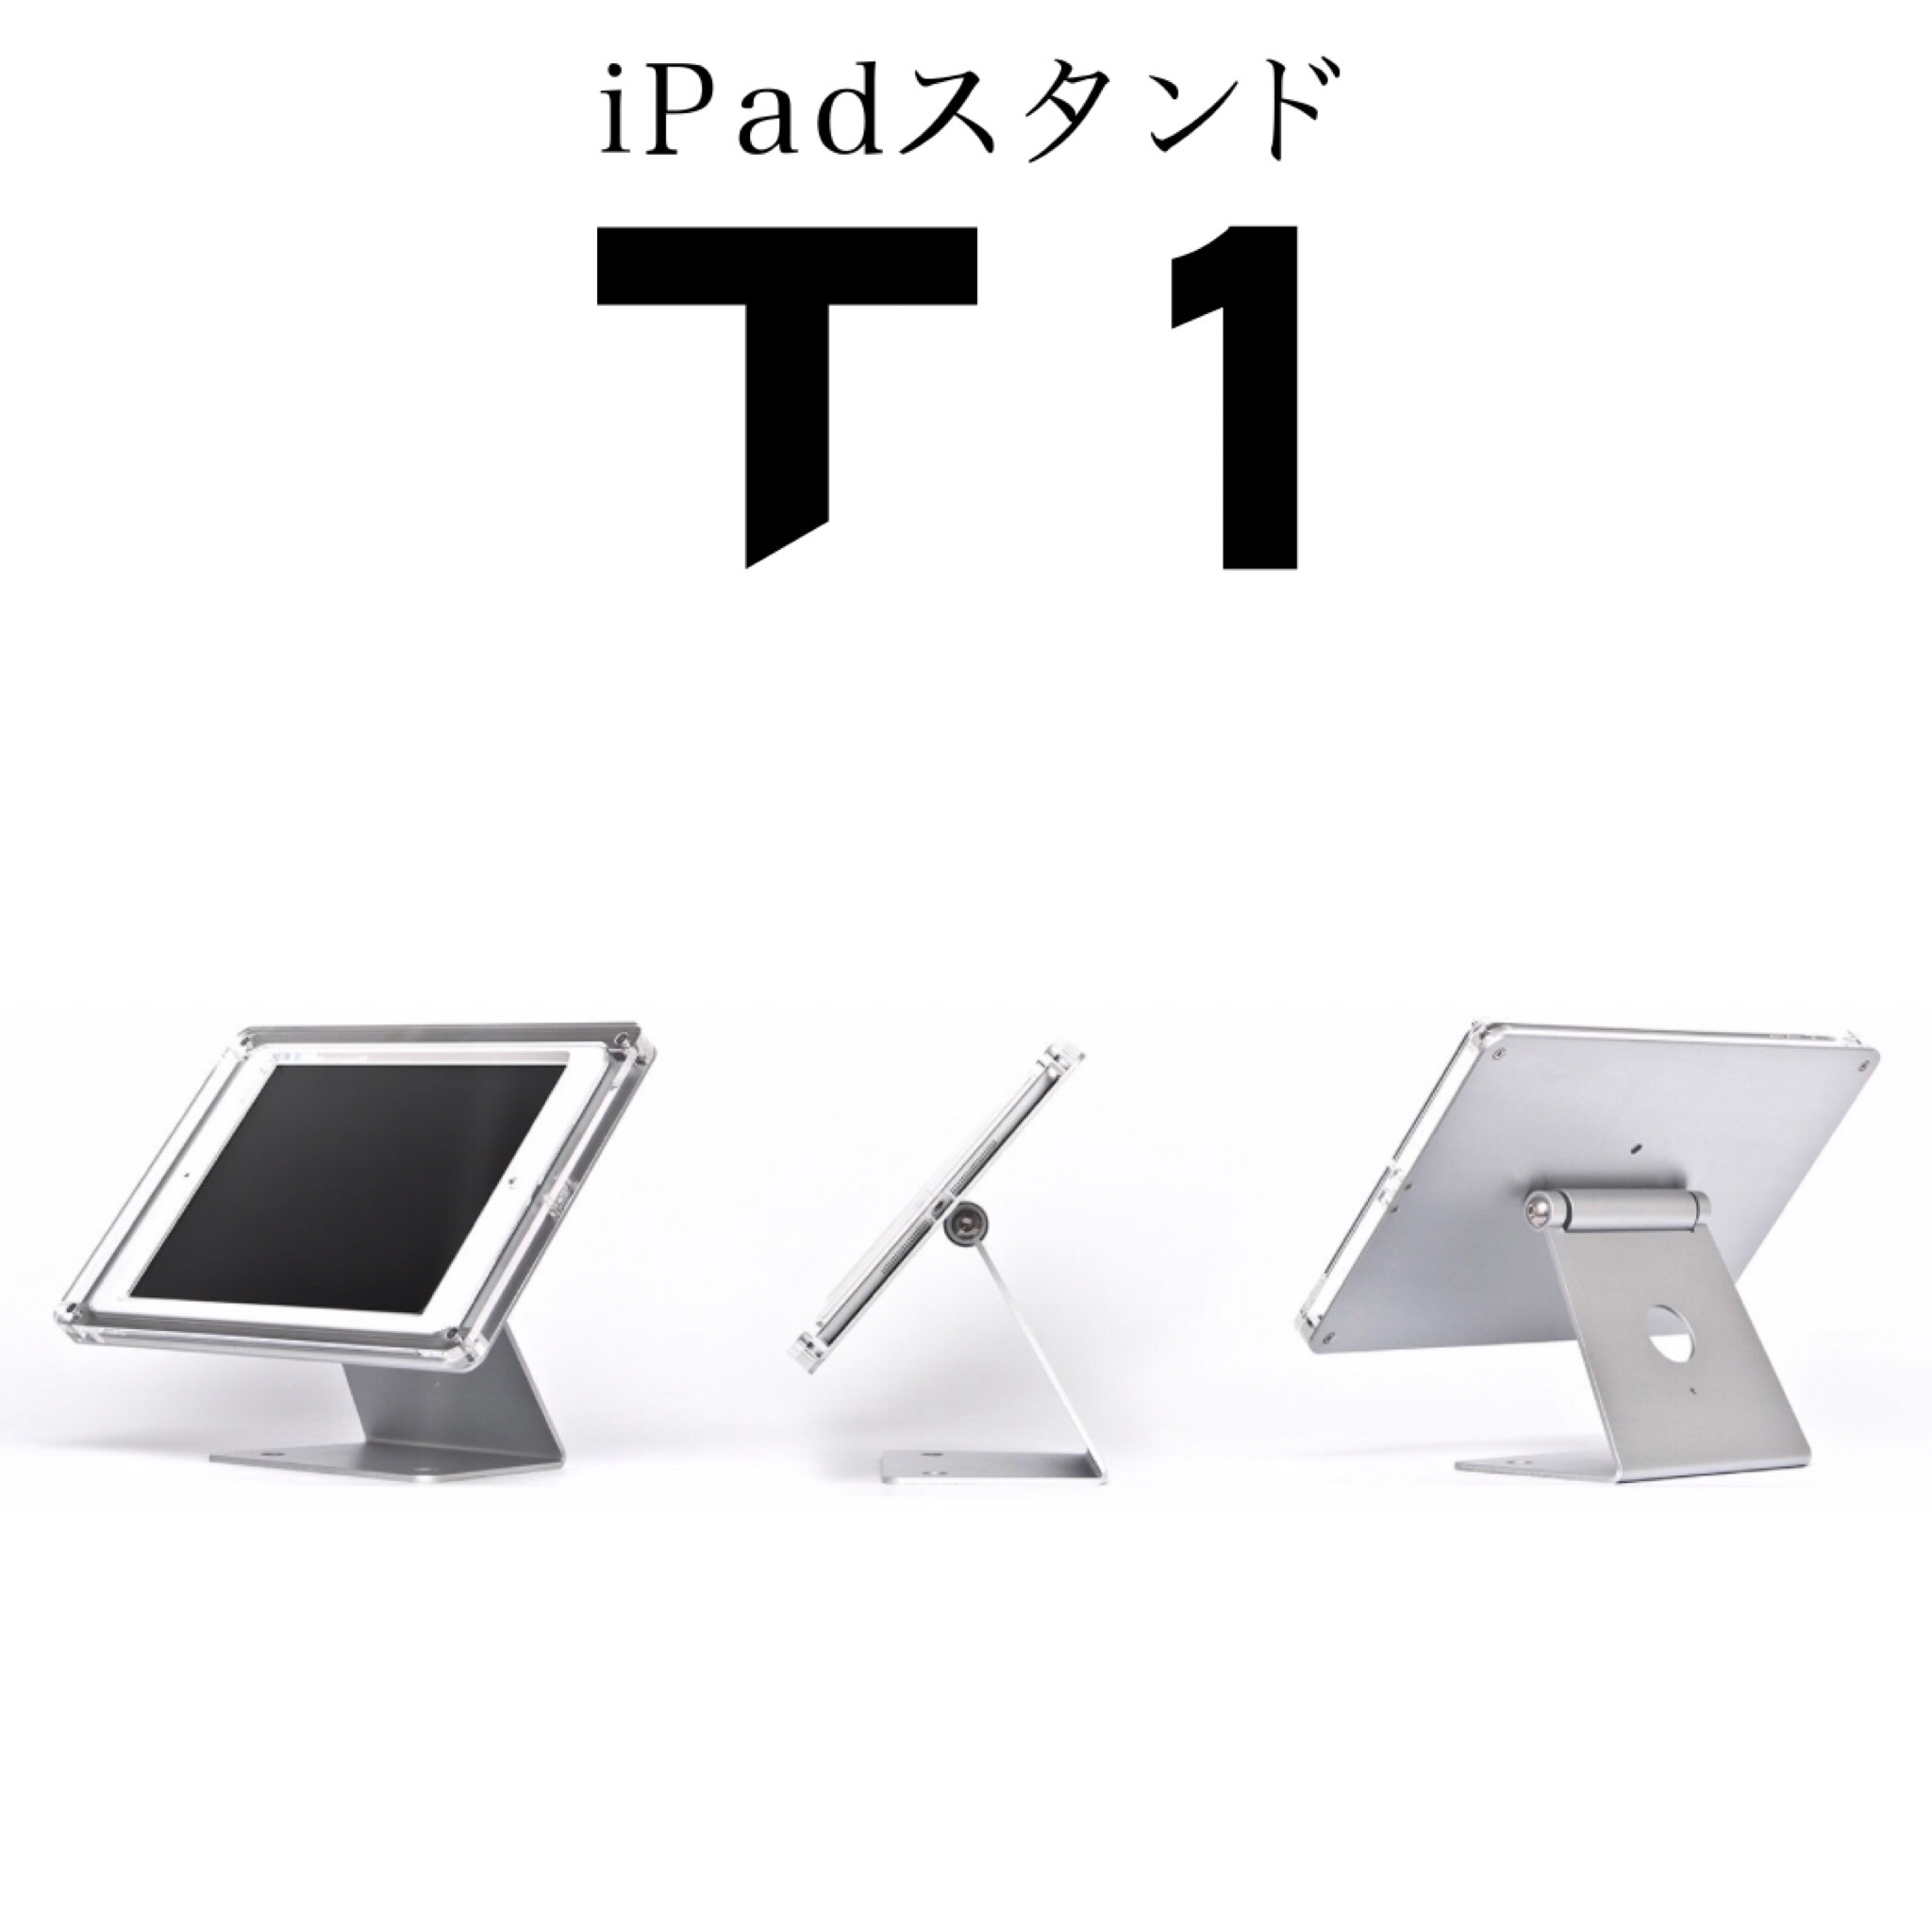 iPad × 受付 × スタンド × 圧倒的納品実績 = ワークスタジオ